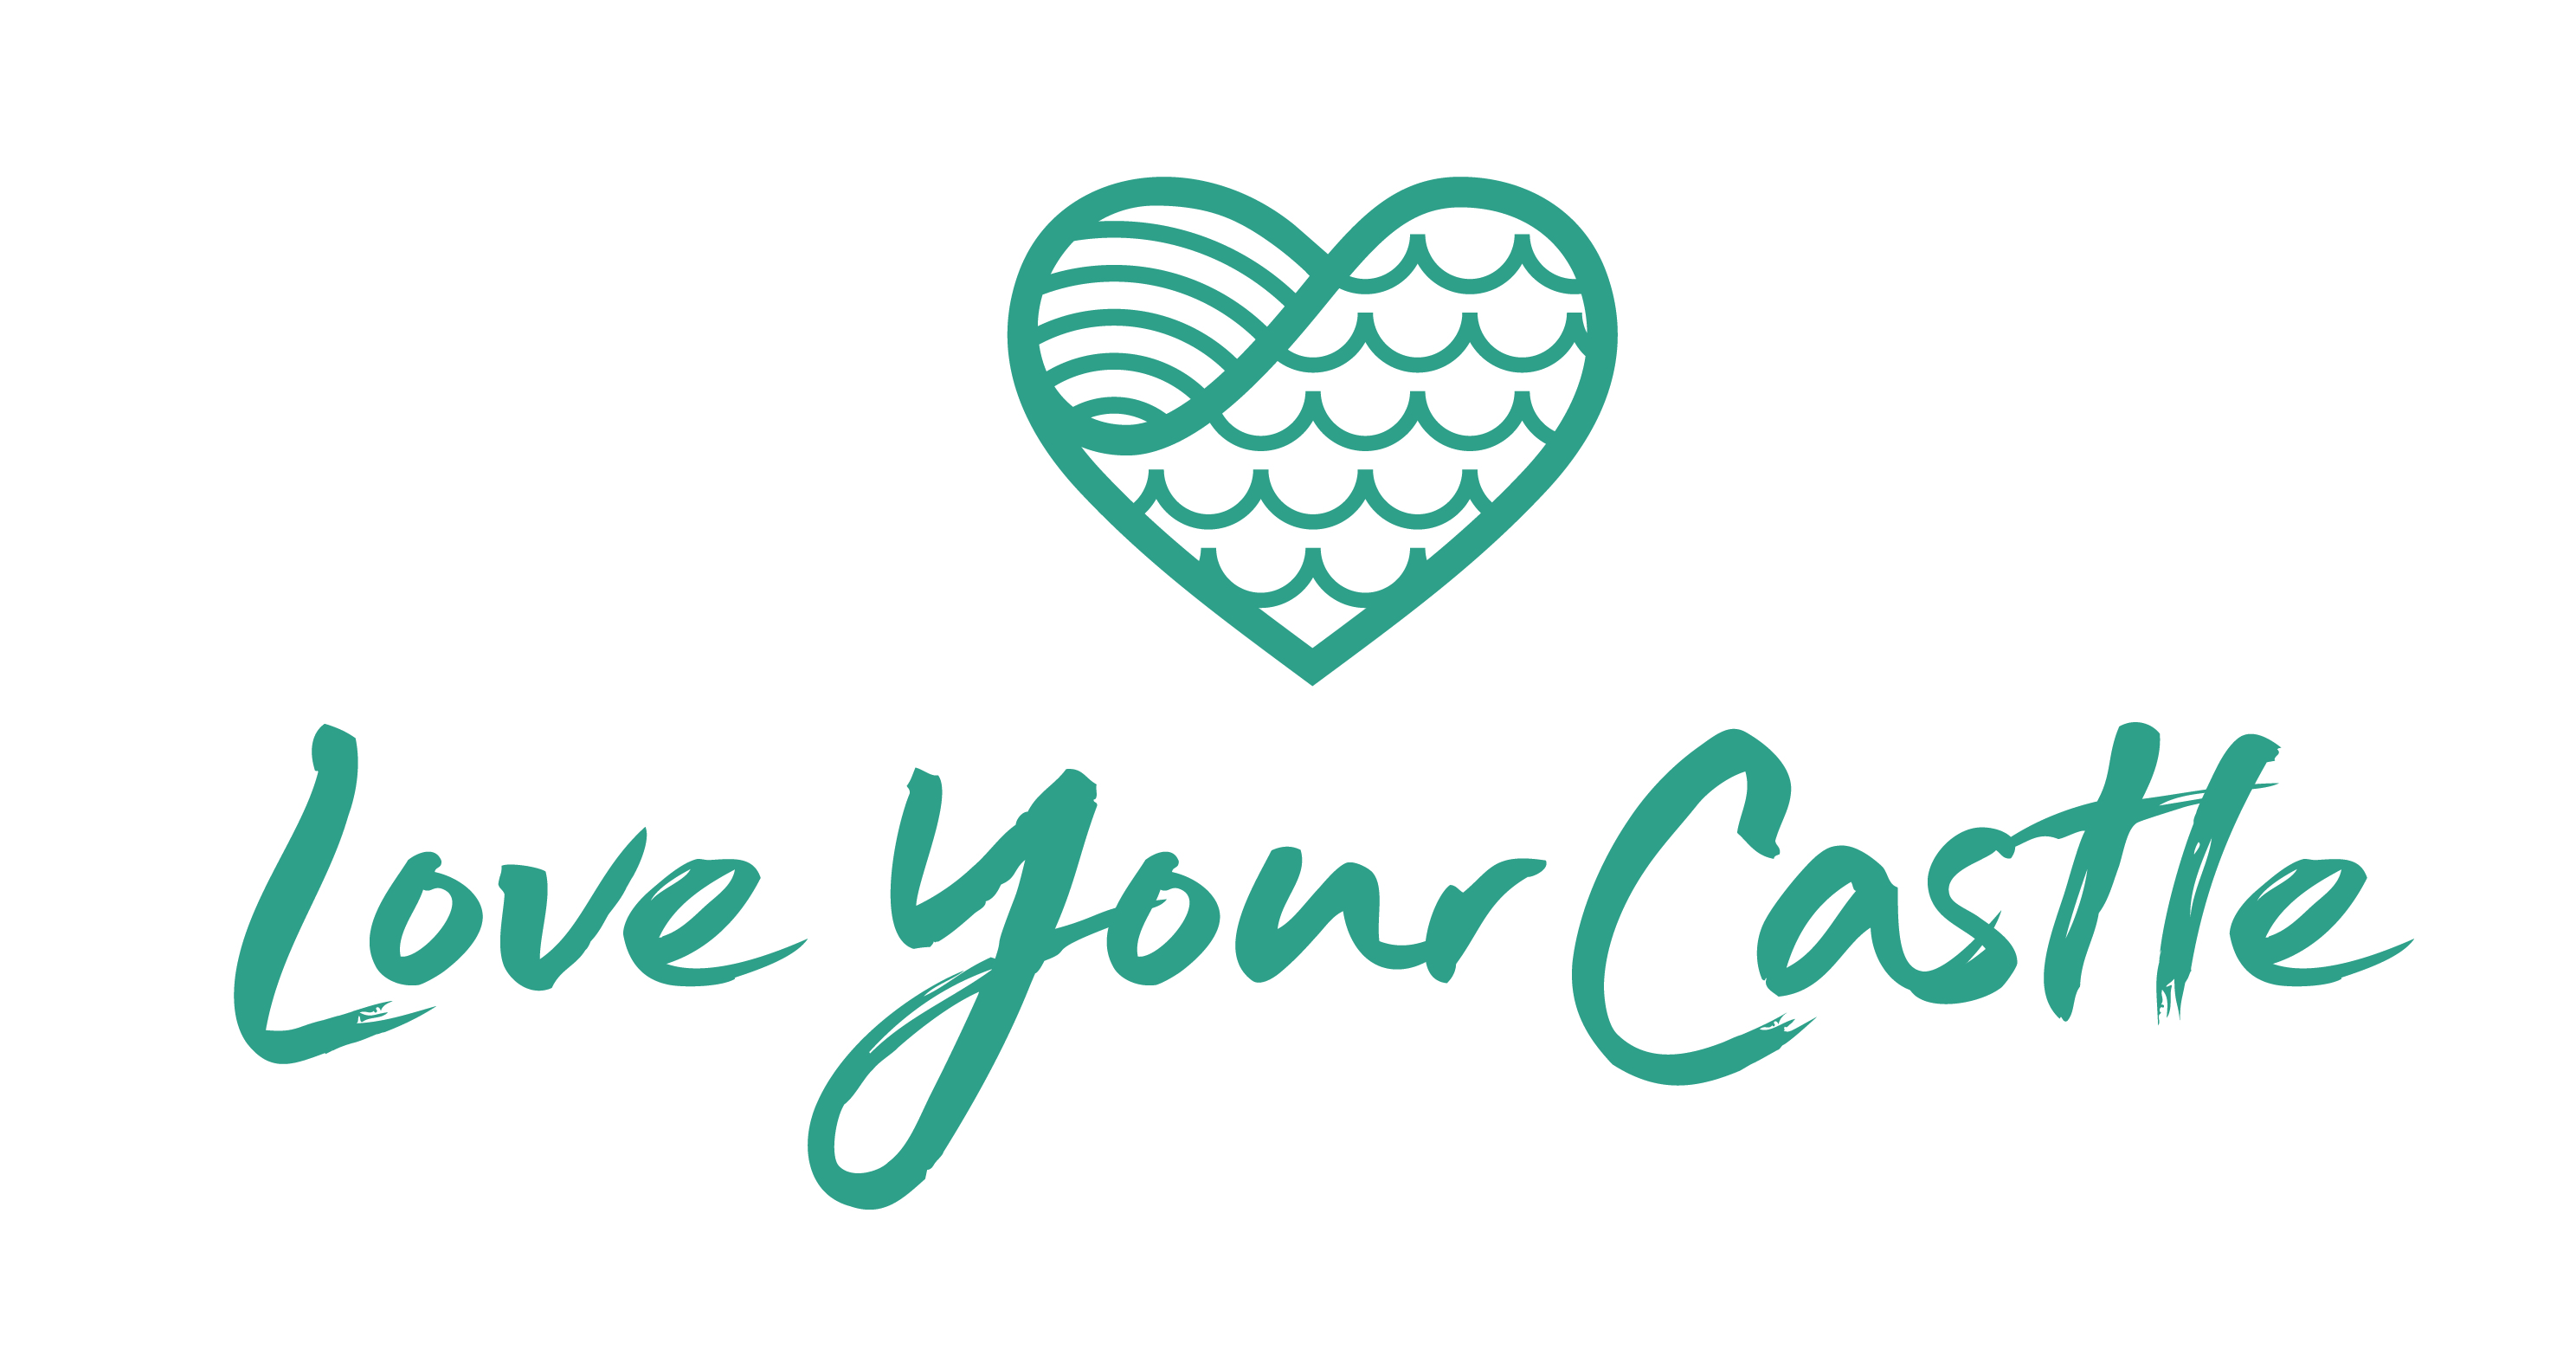 Love you castle logo